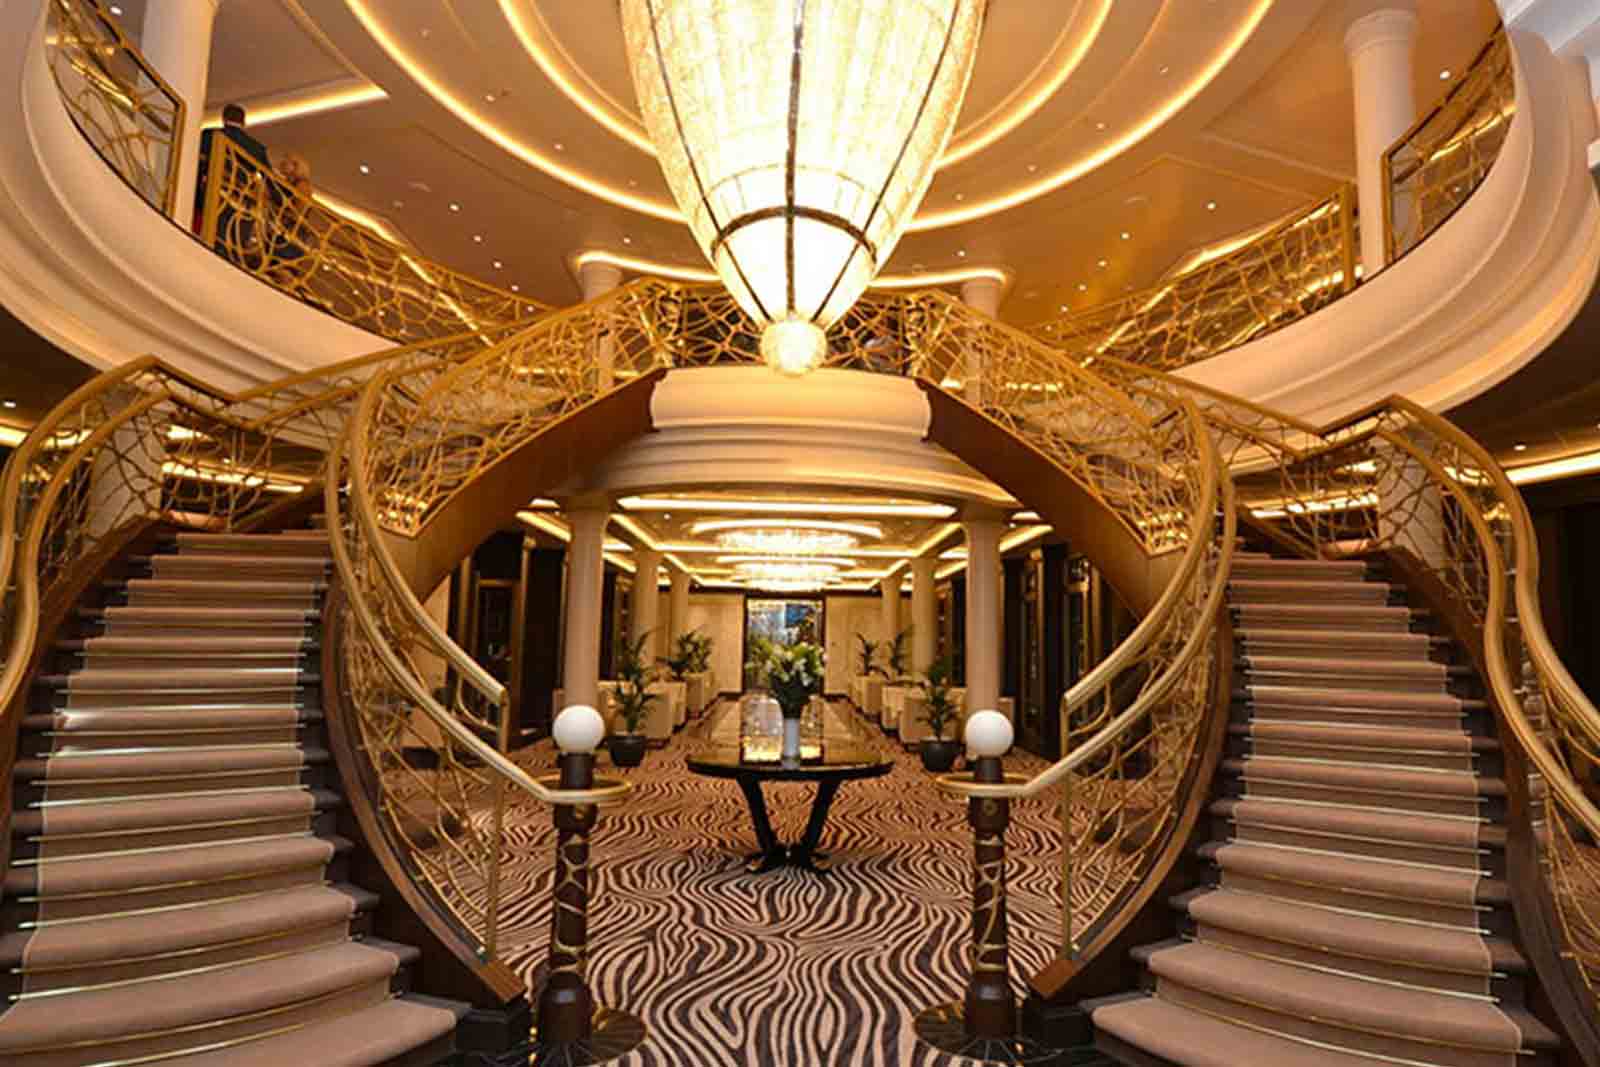 Warm lit interior stairwell of cruise ship